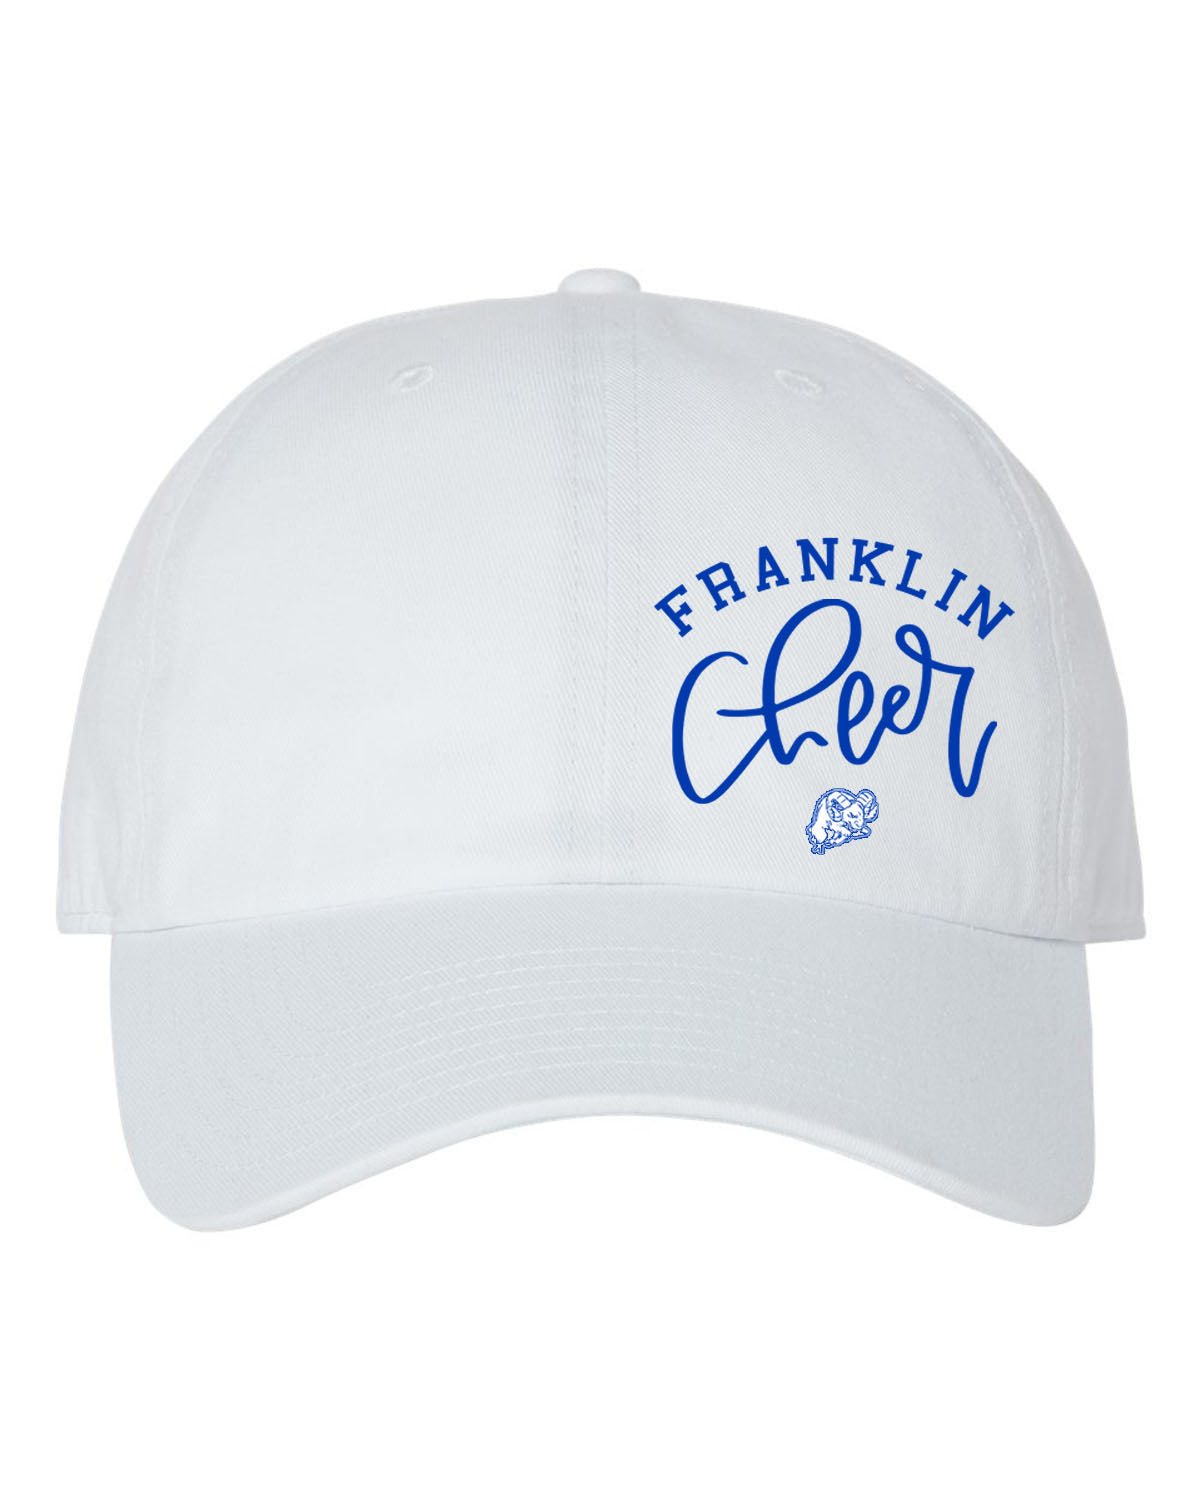 Franklin Cheer Design 3 Trucker Hat